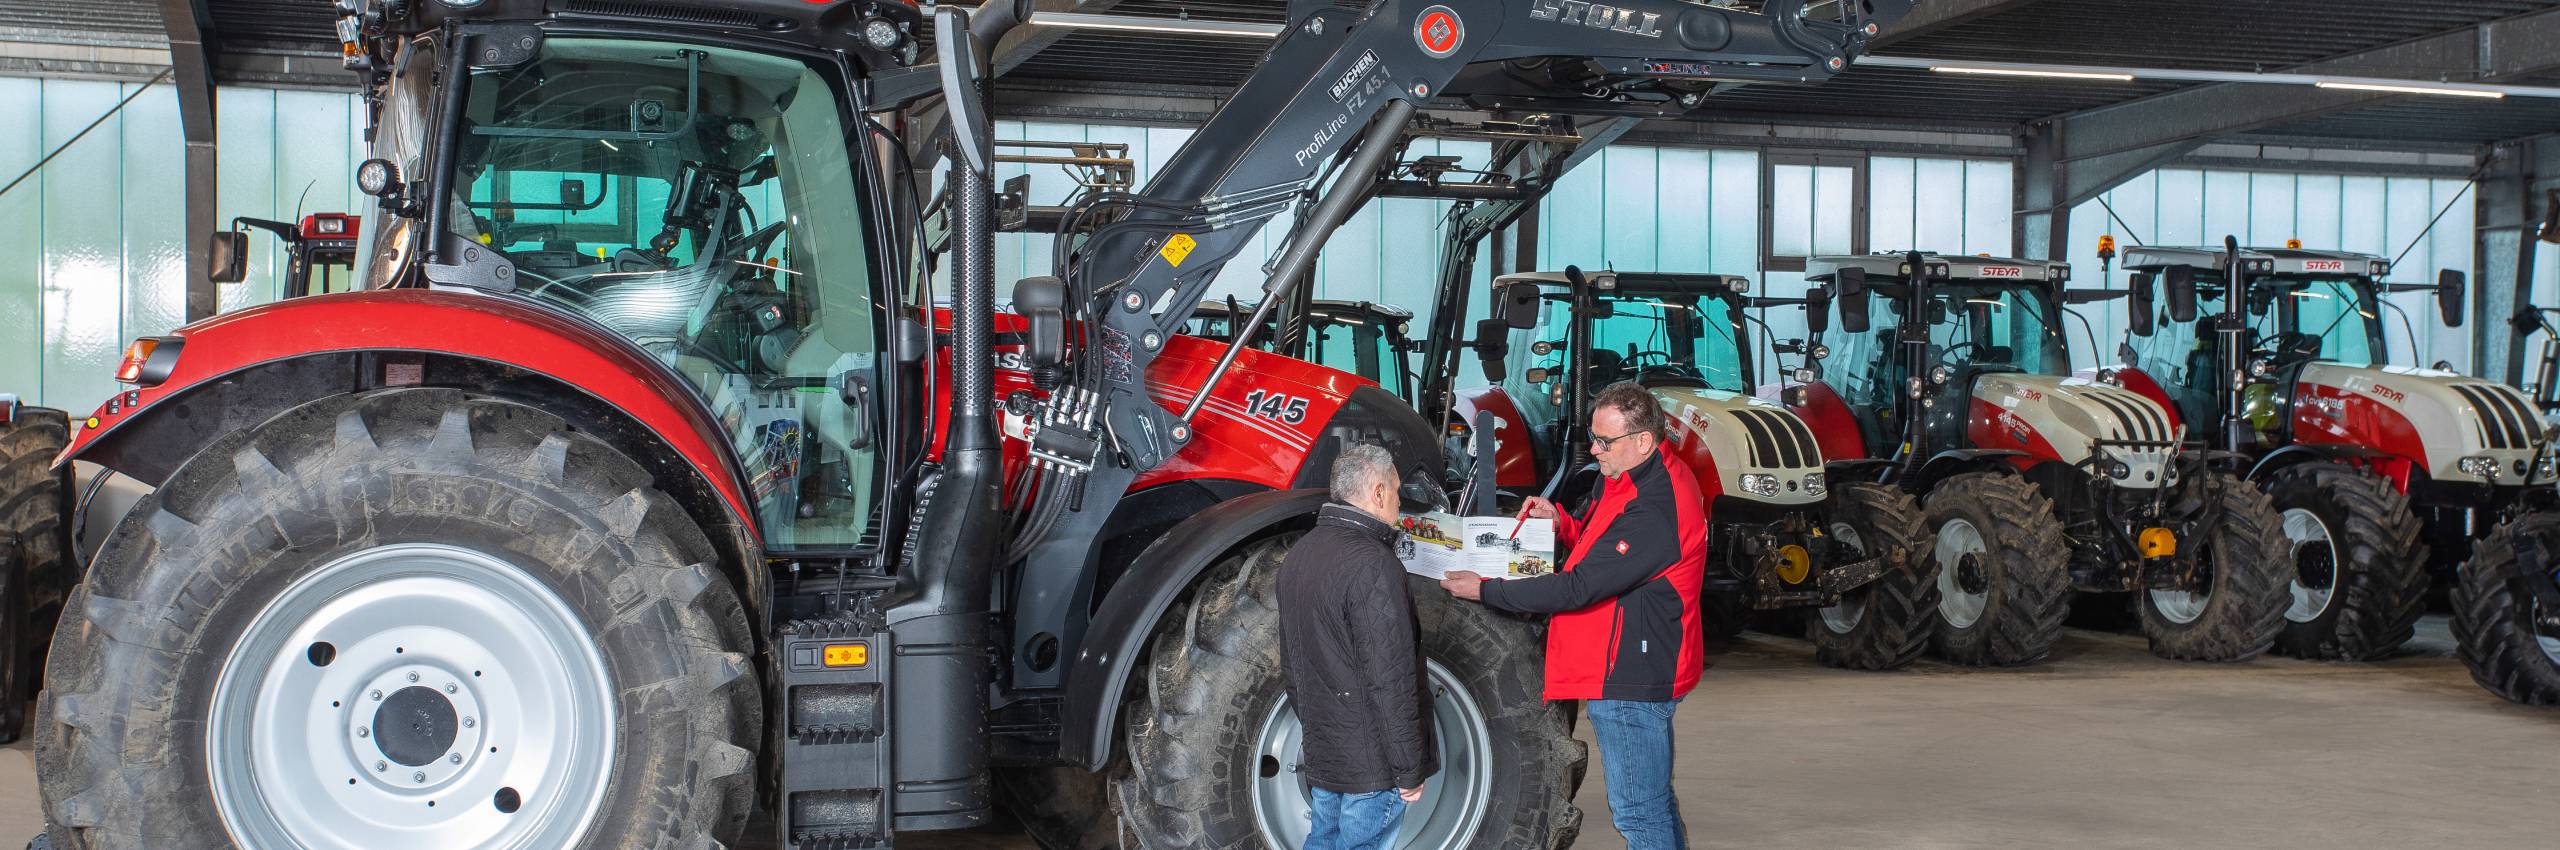 Traktoren – Landtechnik Buchen - Landmaschinen, Traktoren, Erntemaschinen, Ersatzteile  uvm.